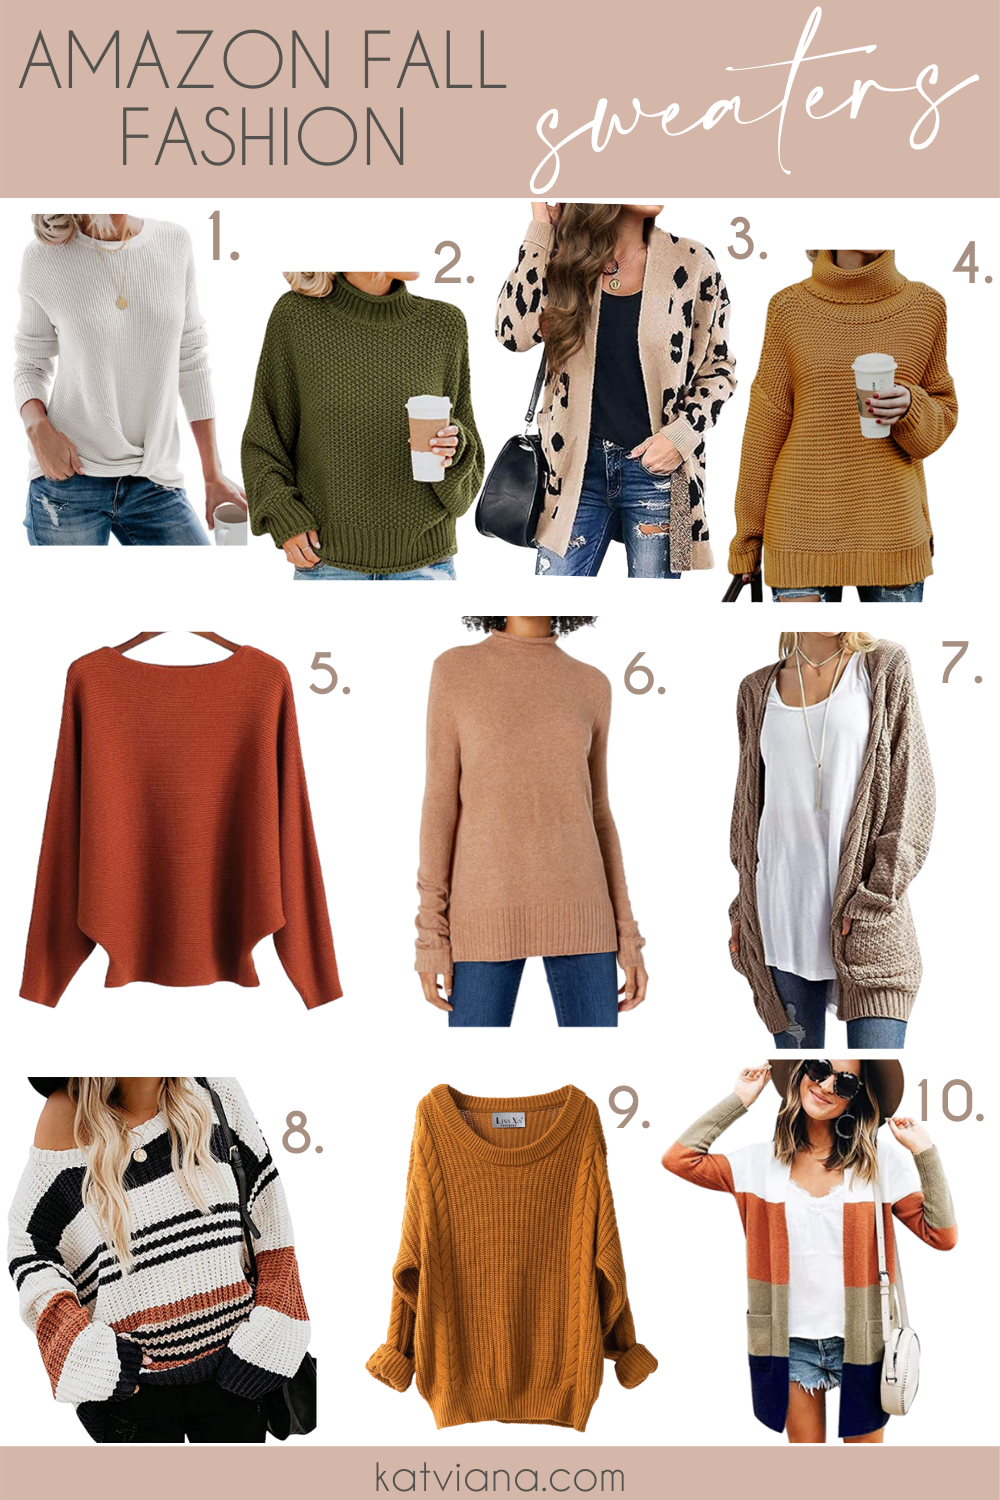 Amazon Fall Fashion - Sweaters | Kat Viana